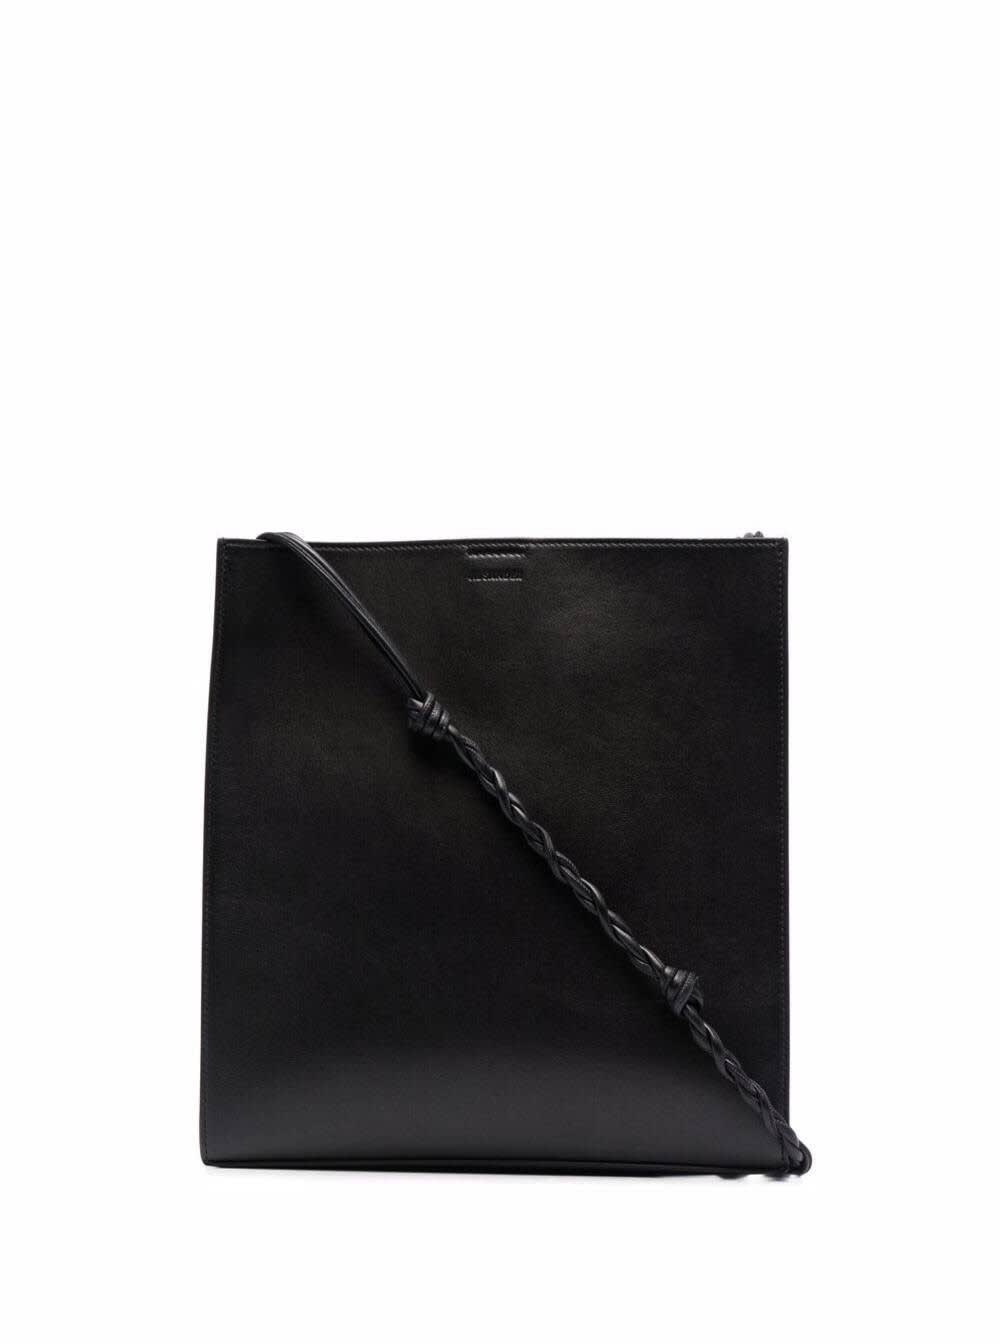 Jil Sander Tangle Black Leather Crossbody Bag With Logo